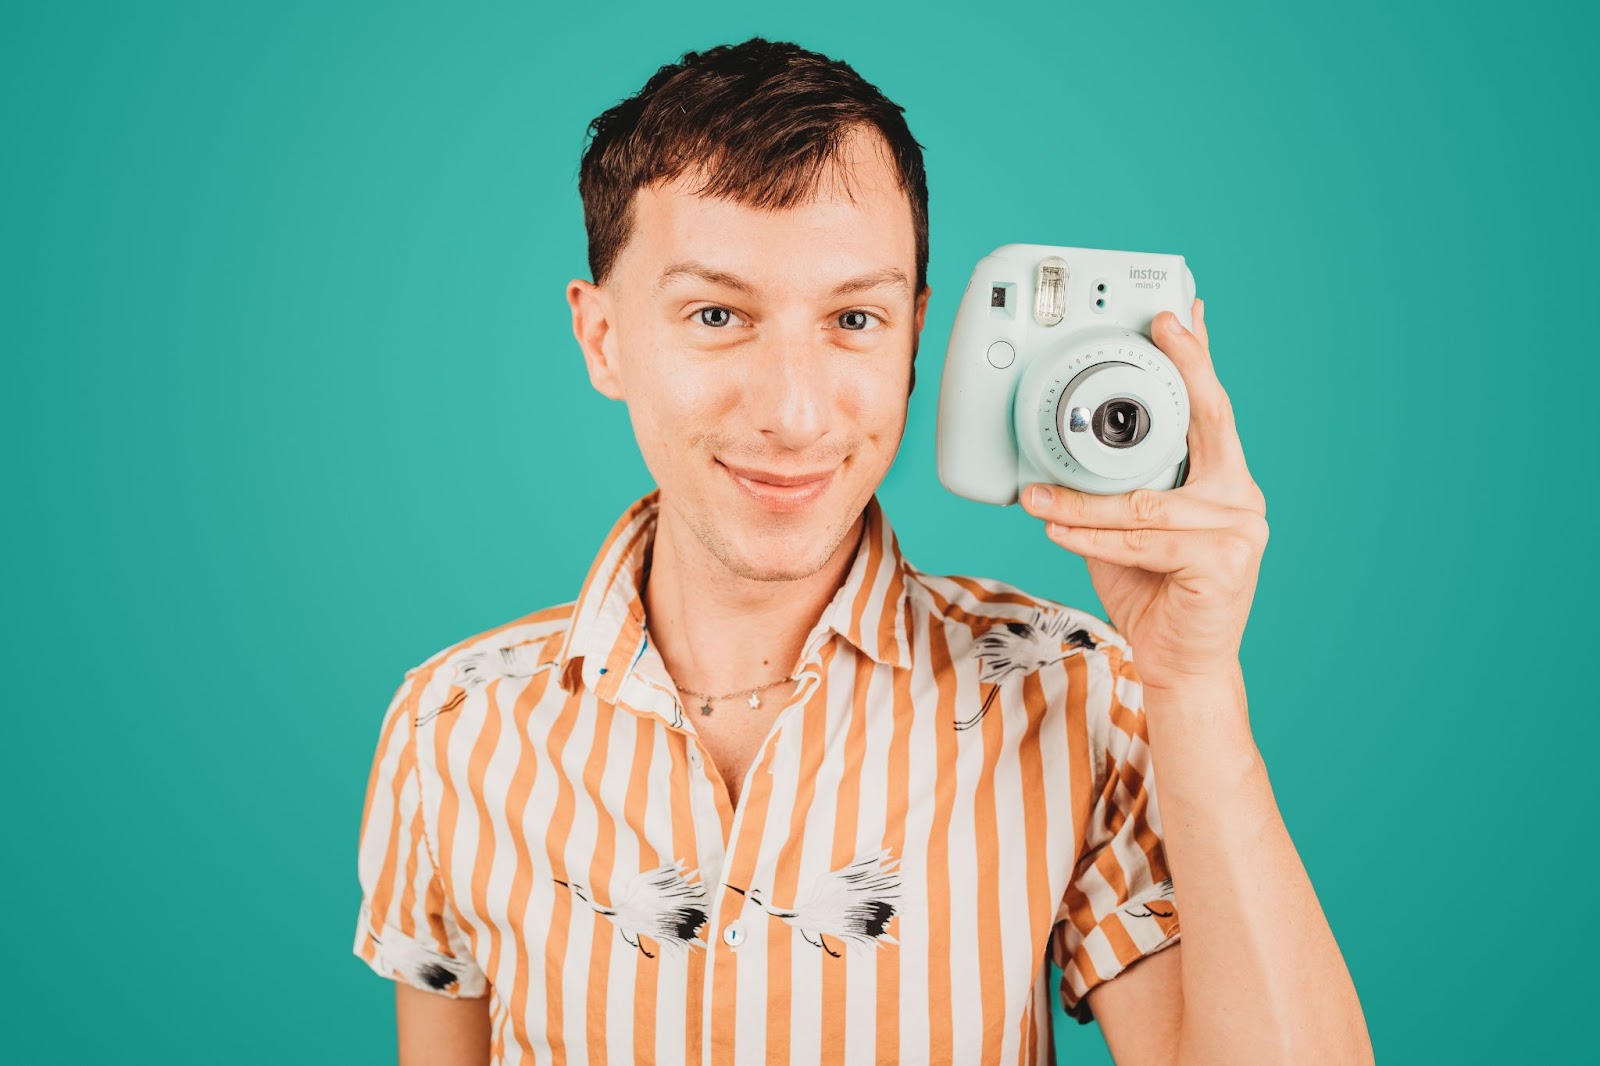 Guy holding a camera